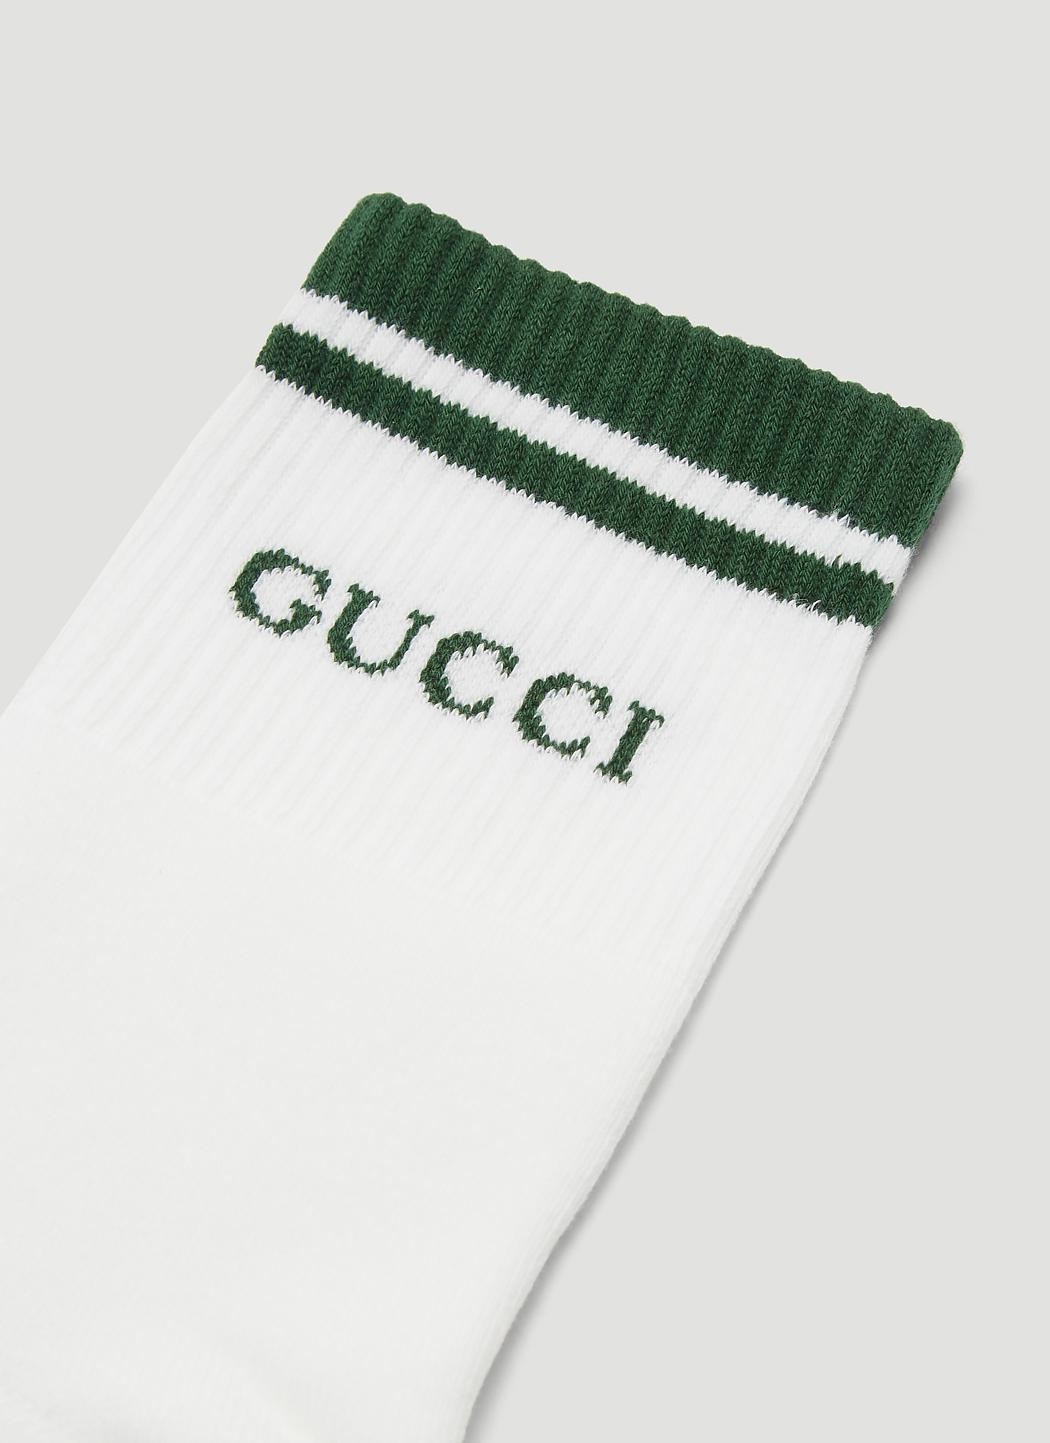 Gucci Wool Logo Band Socks In Green for Men - Lyst